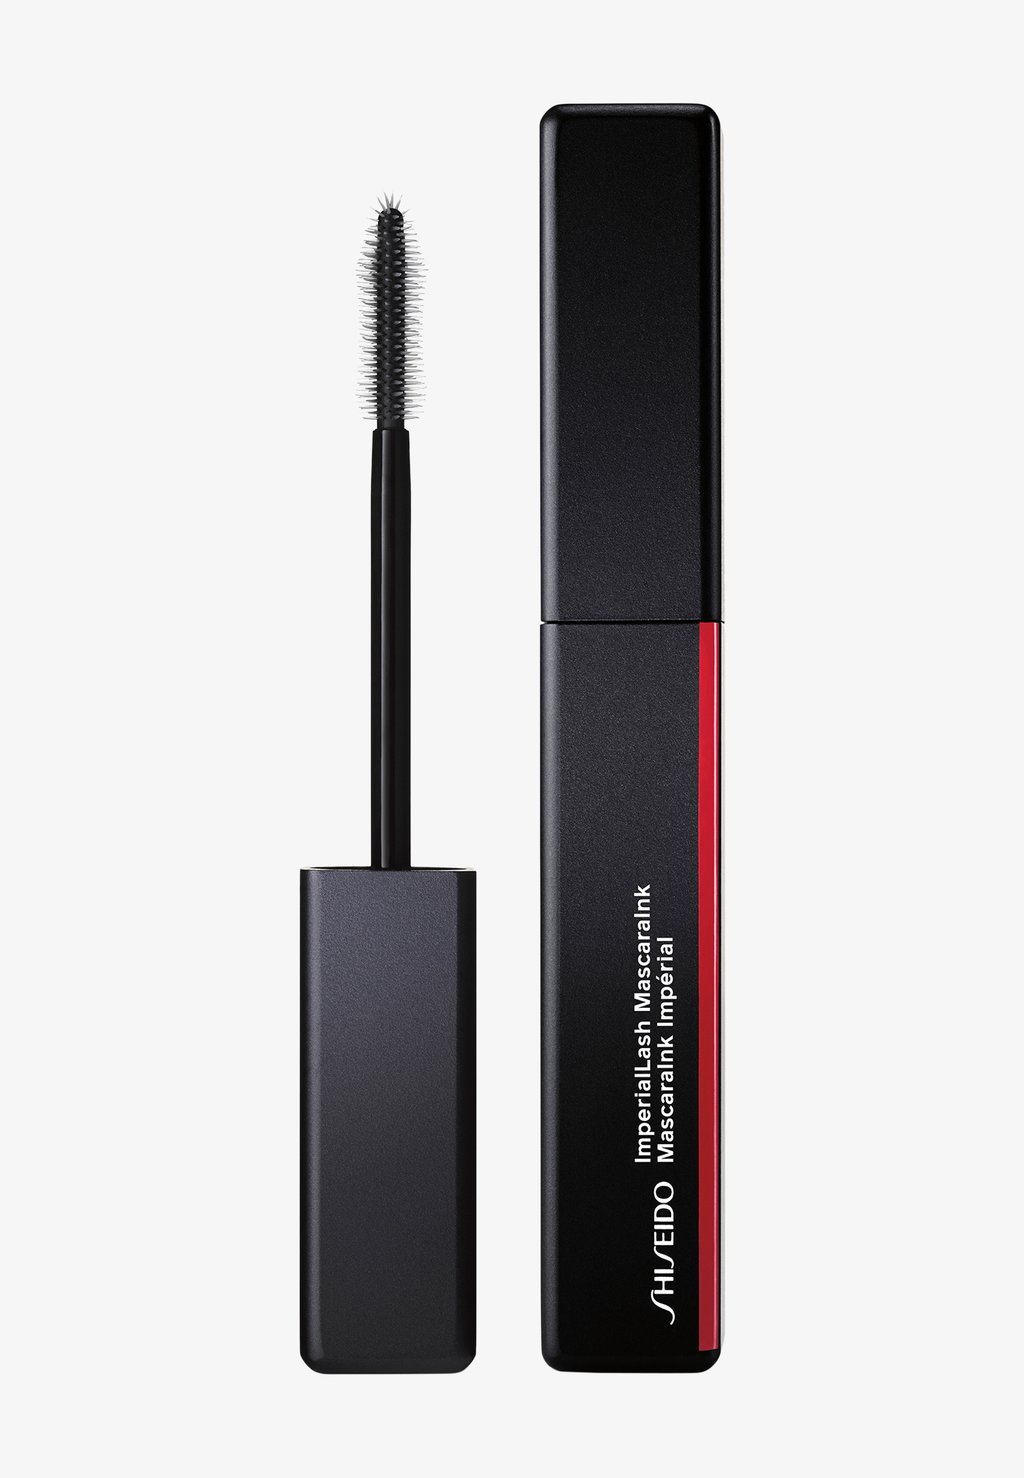 Тушь для ресниц Imperiallash Mascaraink 01 Sumi Black Shiseido, цвет sumi black